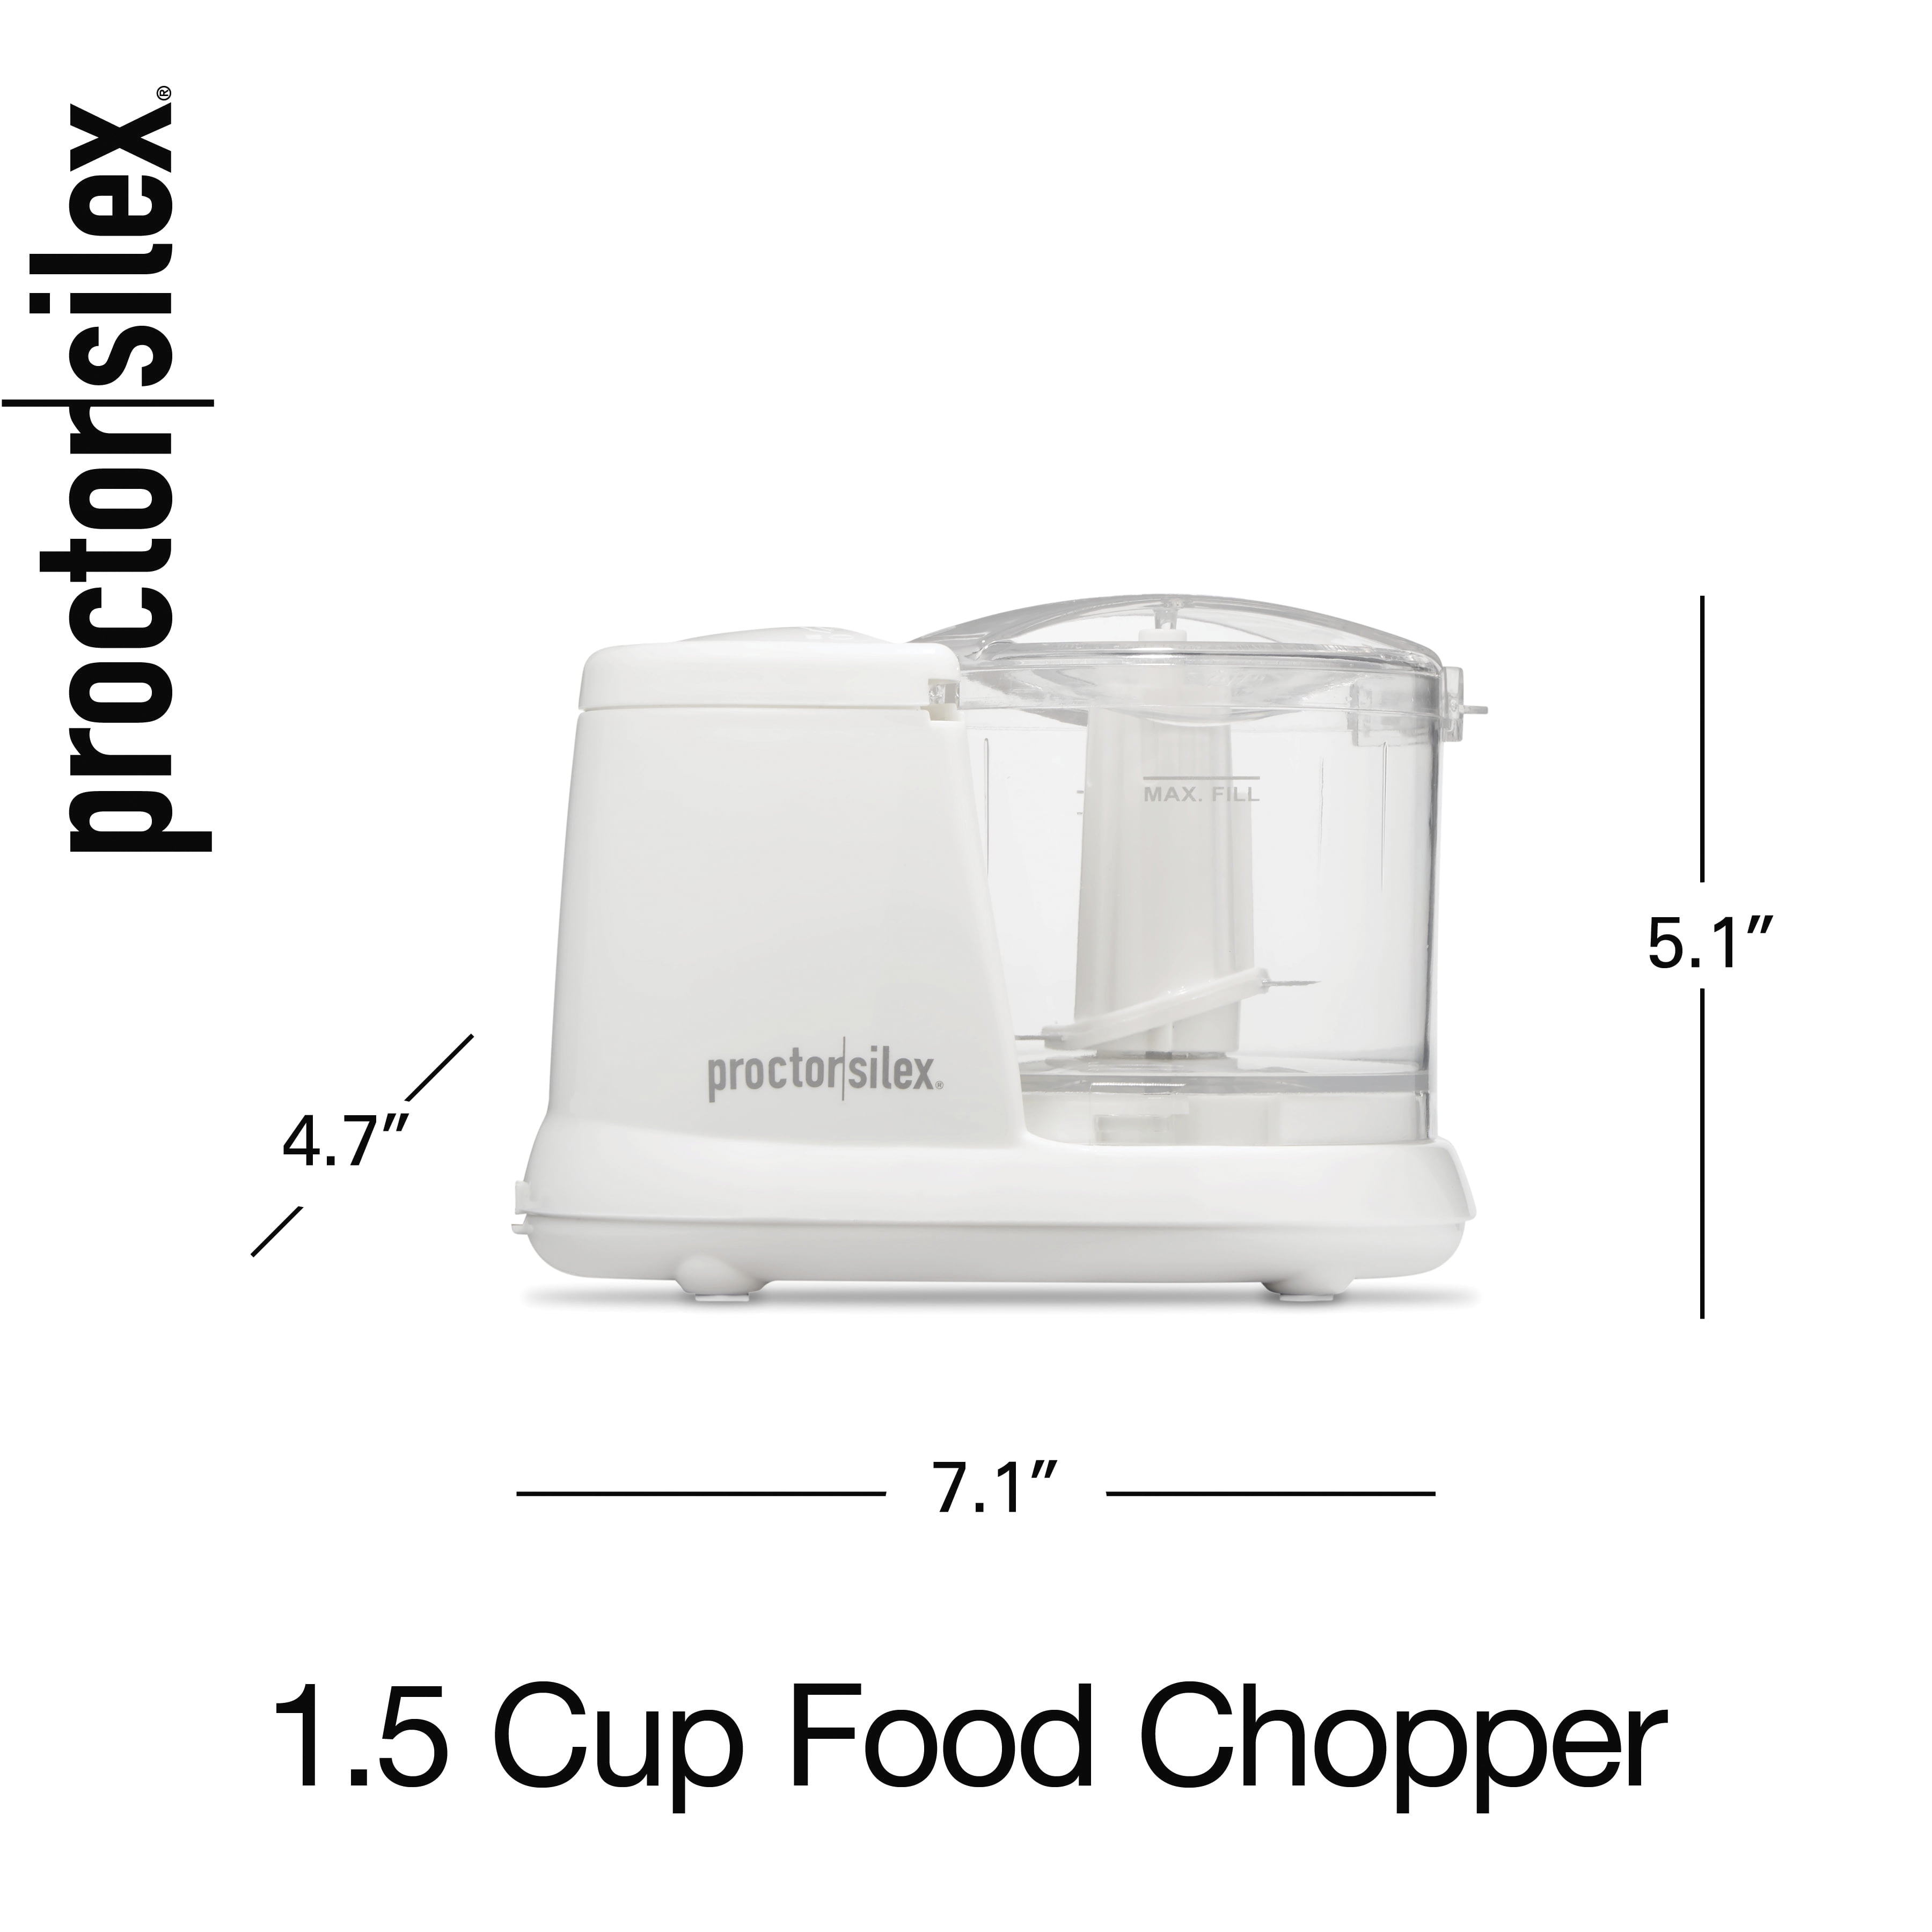 Black & Decker 1.5 cup electric food chopper for $9.22 - Clark Deals